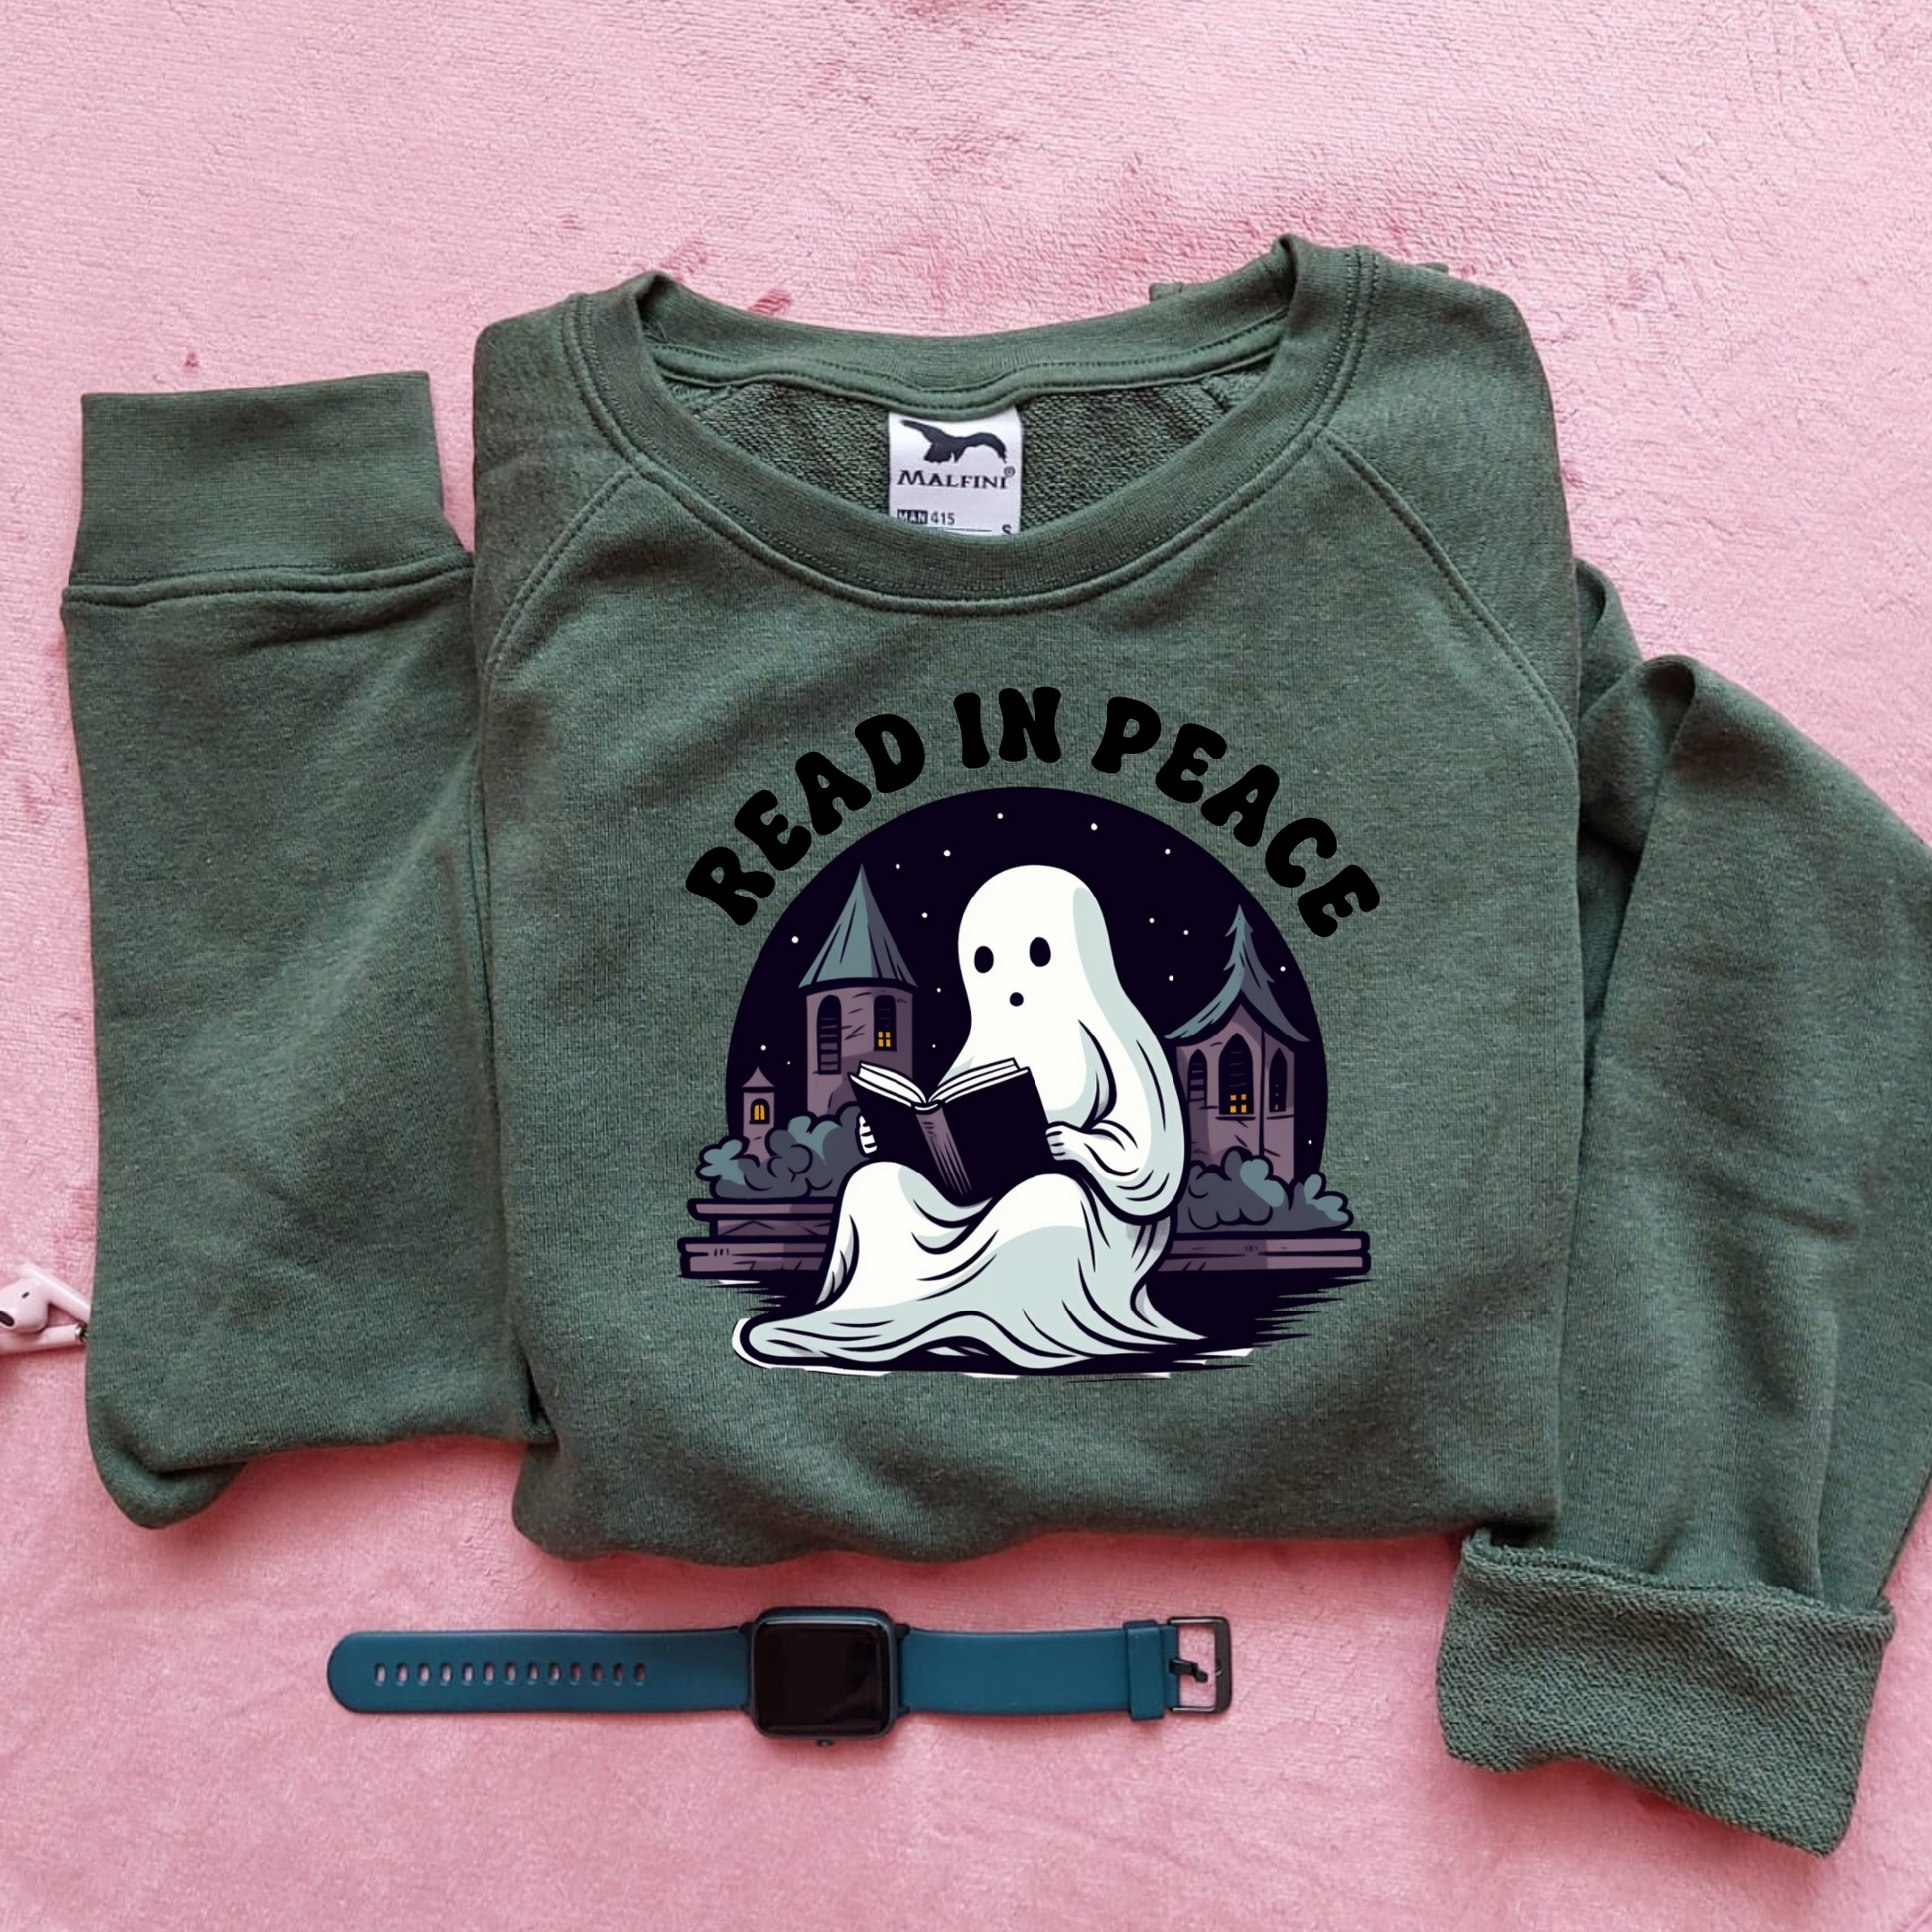 Bluza Personalizata de Halloween - Fantoma care Citește Read in Peace